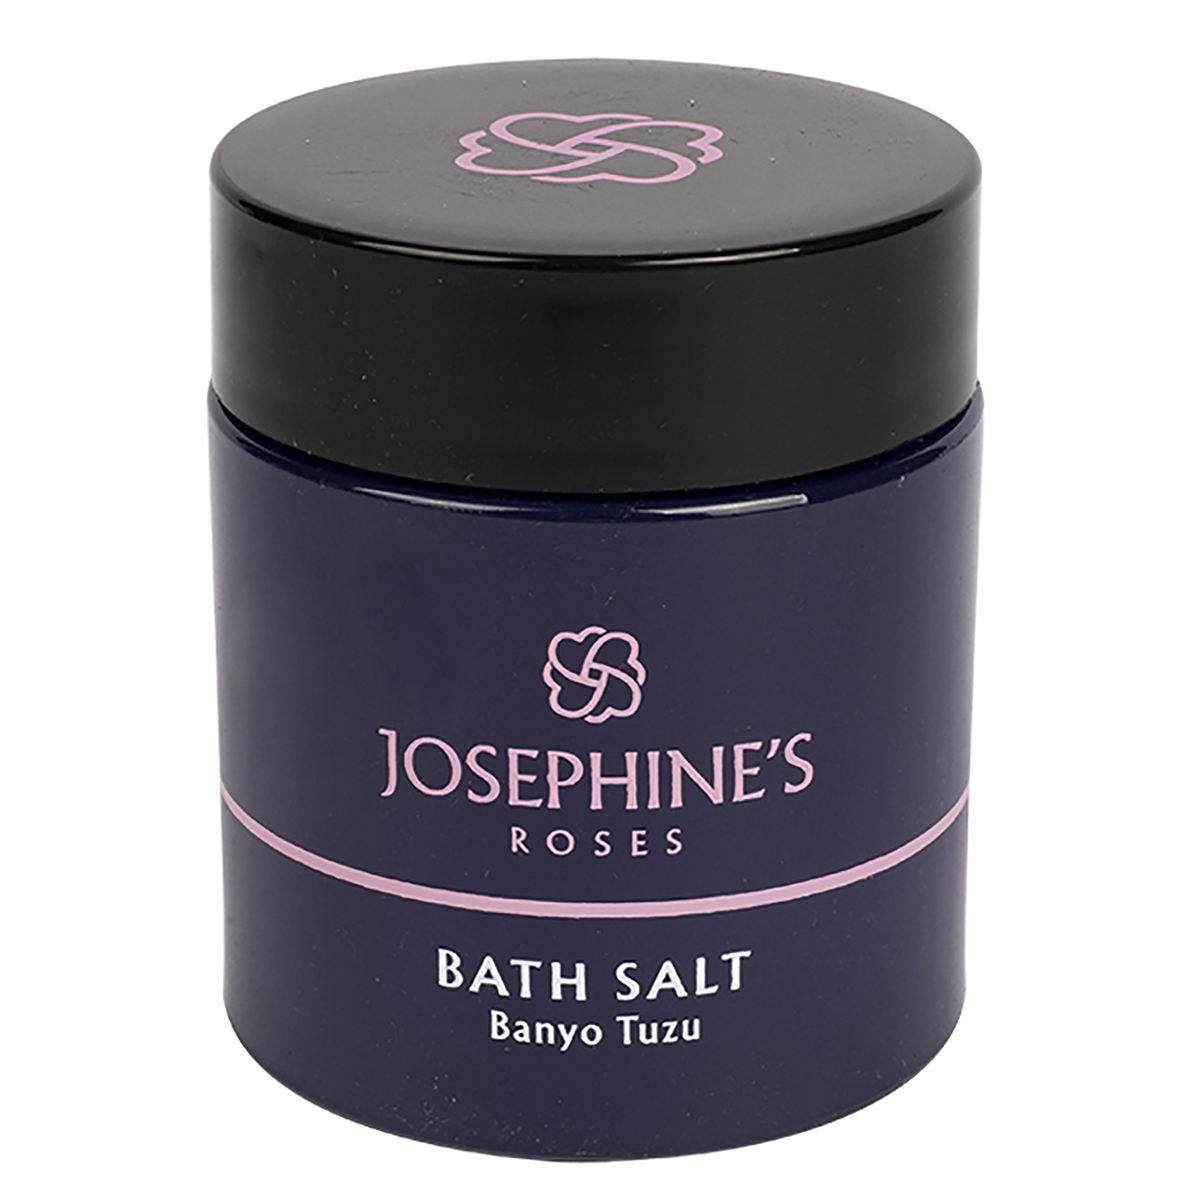 Josephine’s roses bath salt